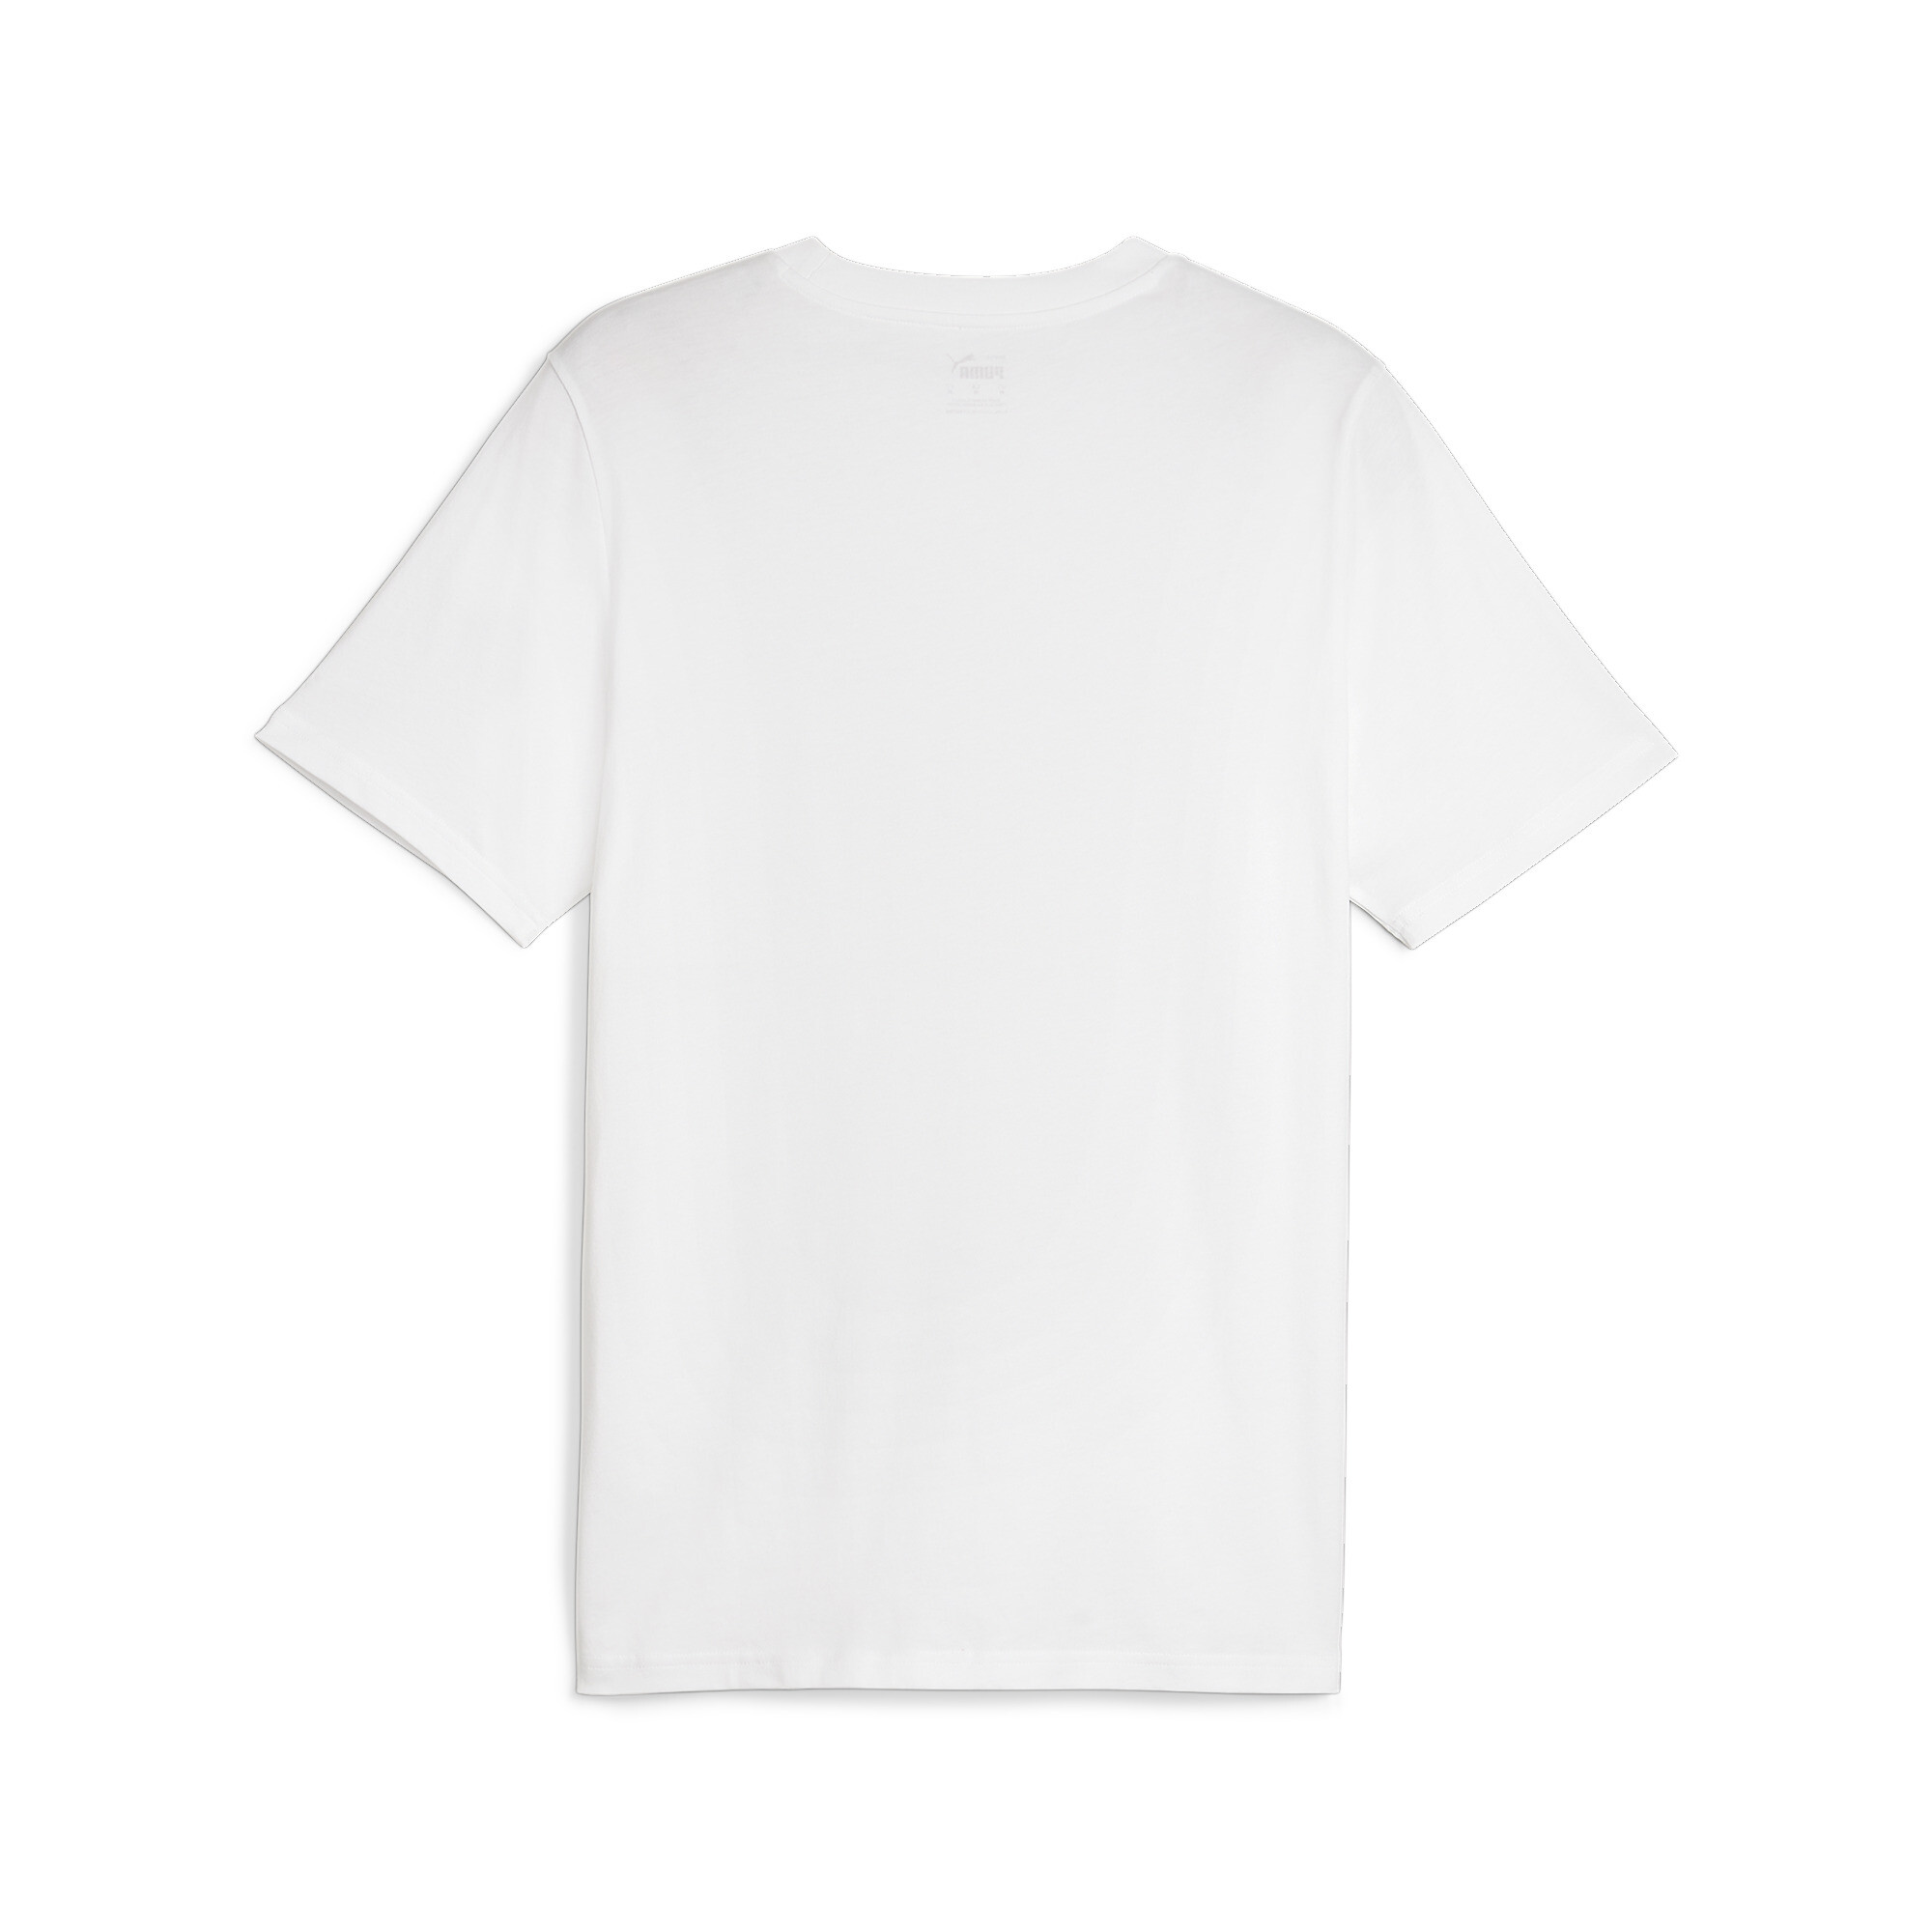 Men's PUMA GRAPHICS Foil T-Shirt In White, Size Small